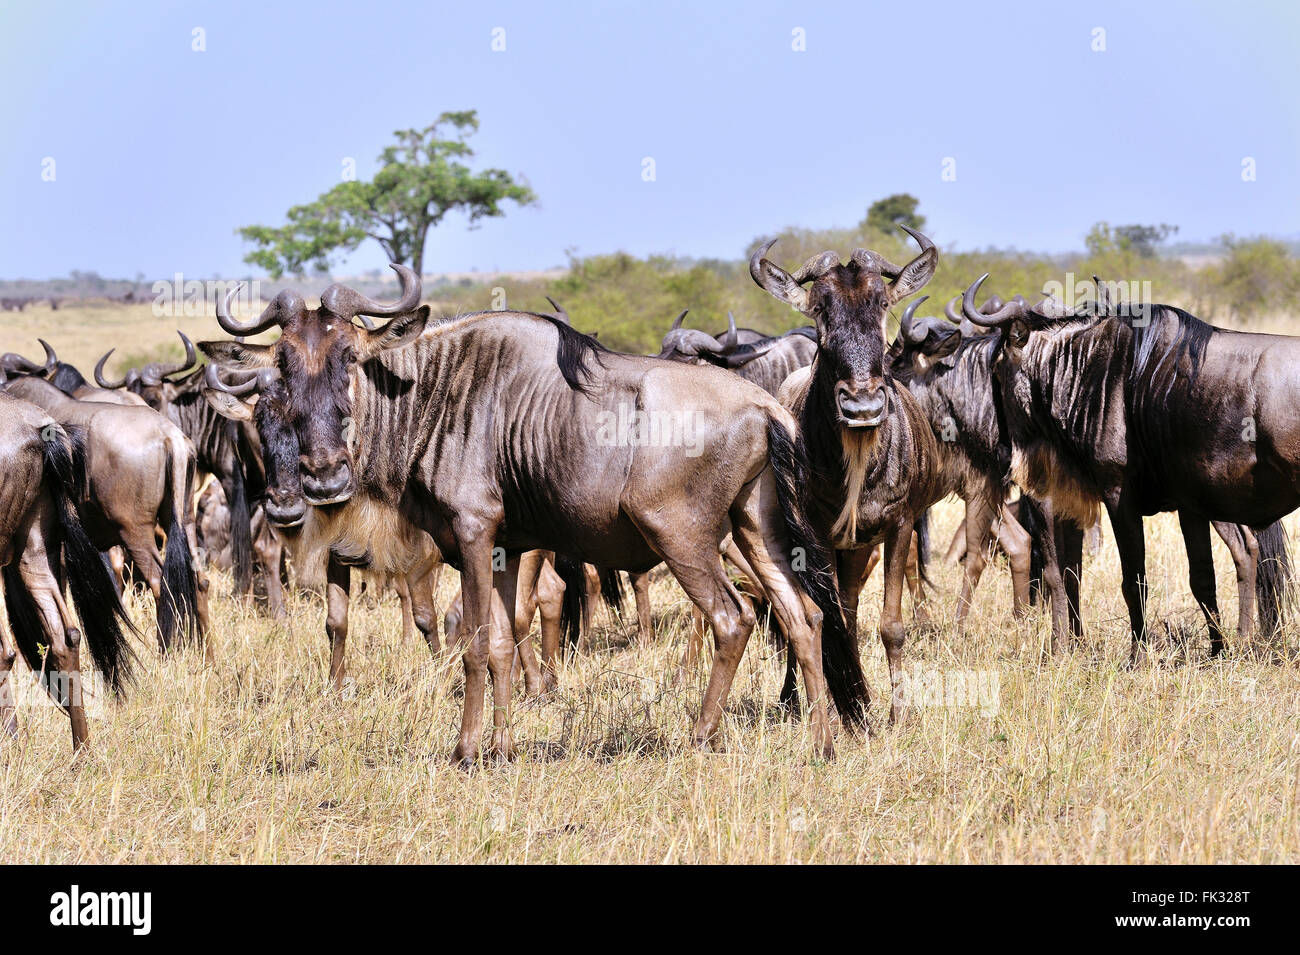 Wildebeests, Connochaetes taurinus, in Masai Mara Stock Photo